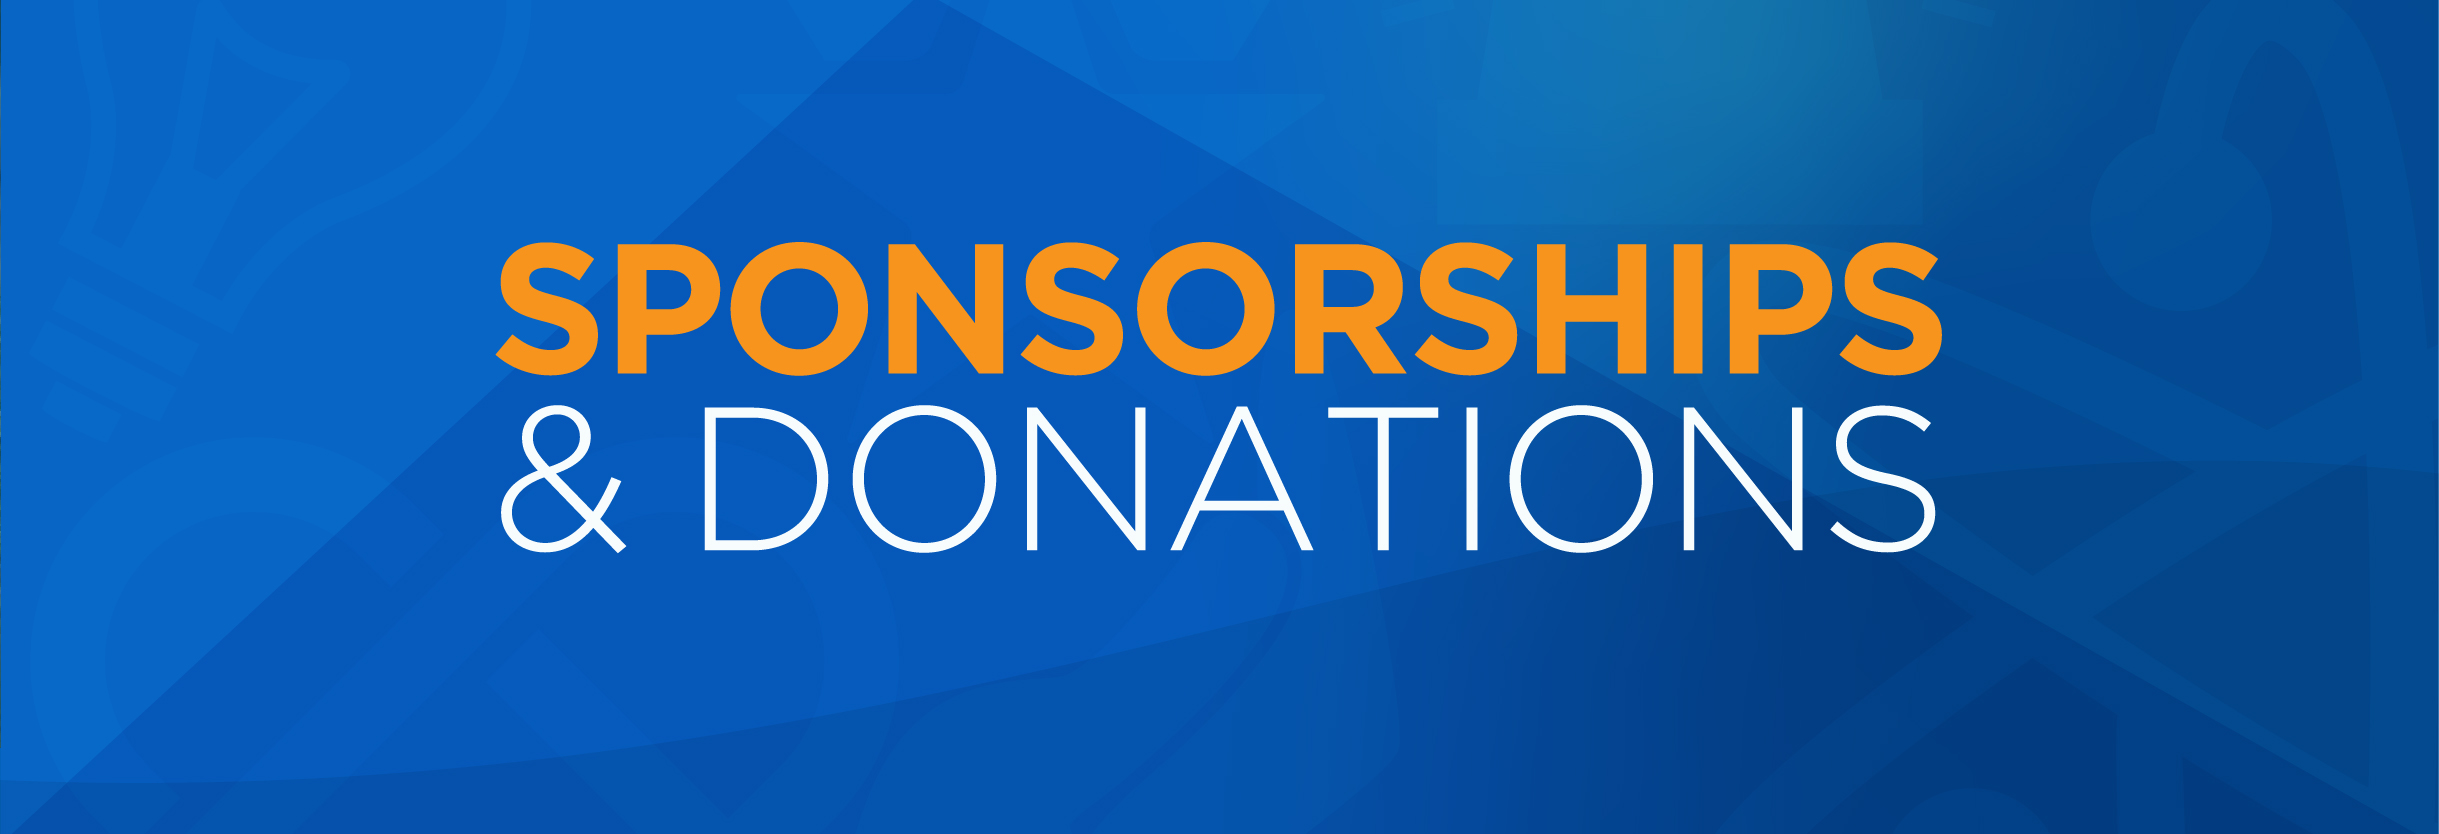 Sponsorships & Donations July 2019 SECO News